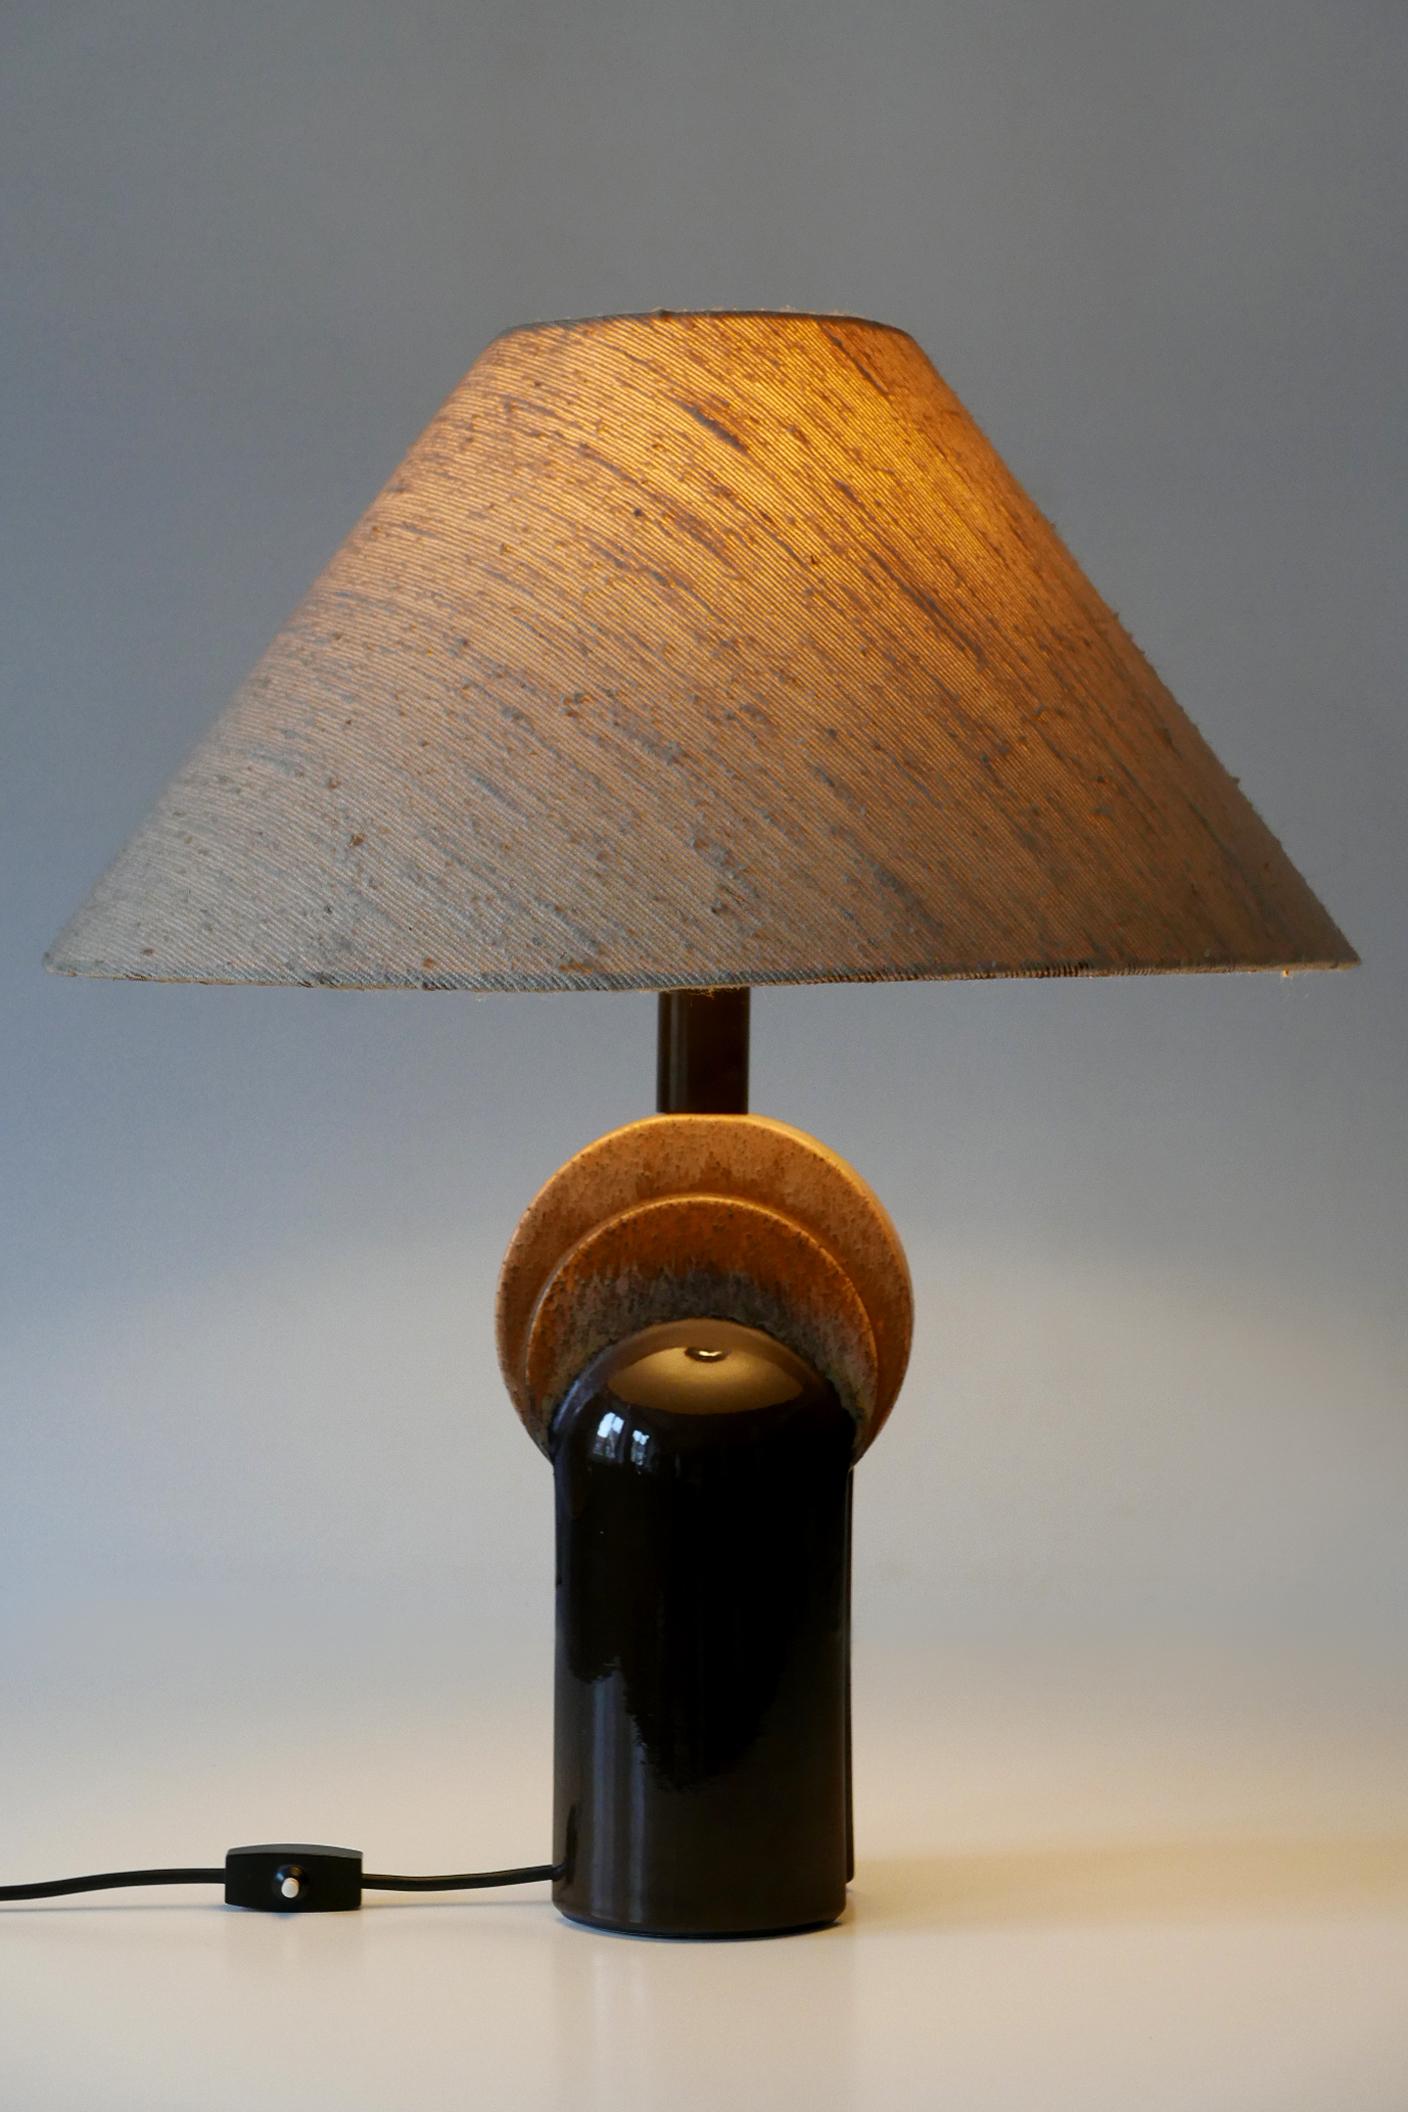 Elegant Mid-Century Modern Ceramic Table Lamp by Leola Design Germany 1960s For Sale 8